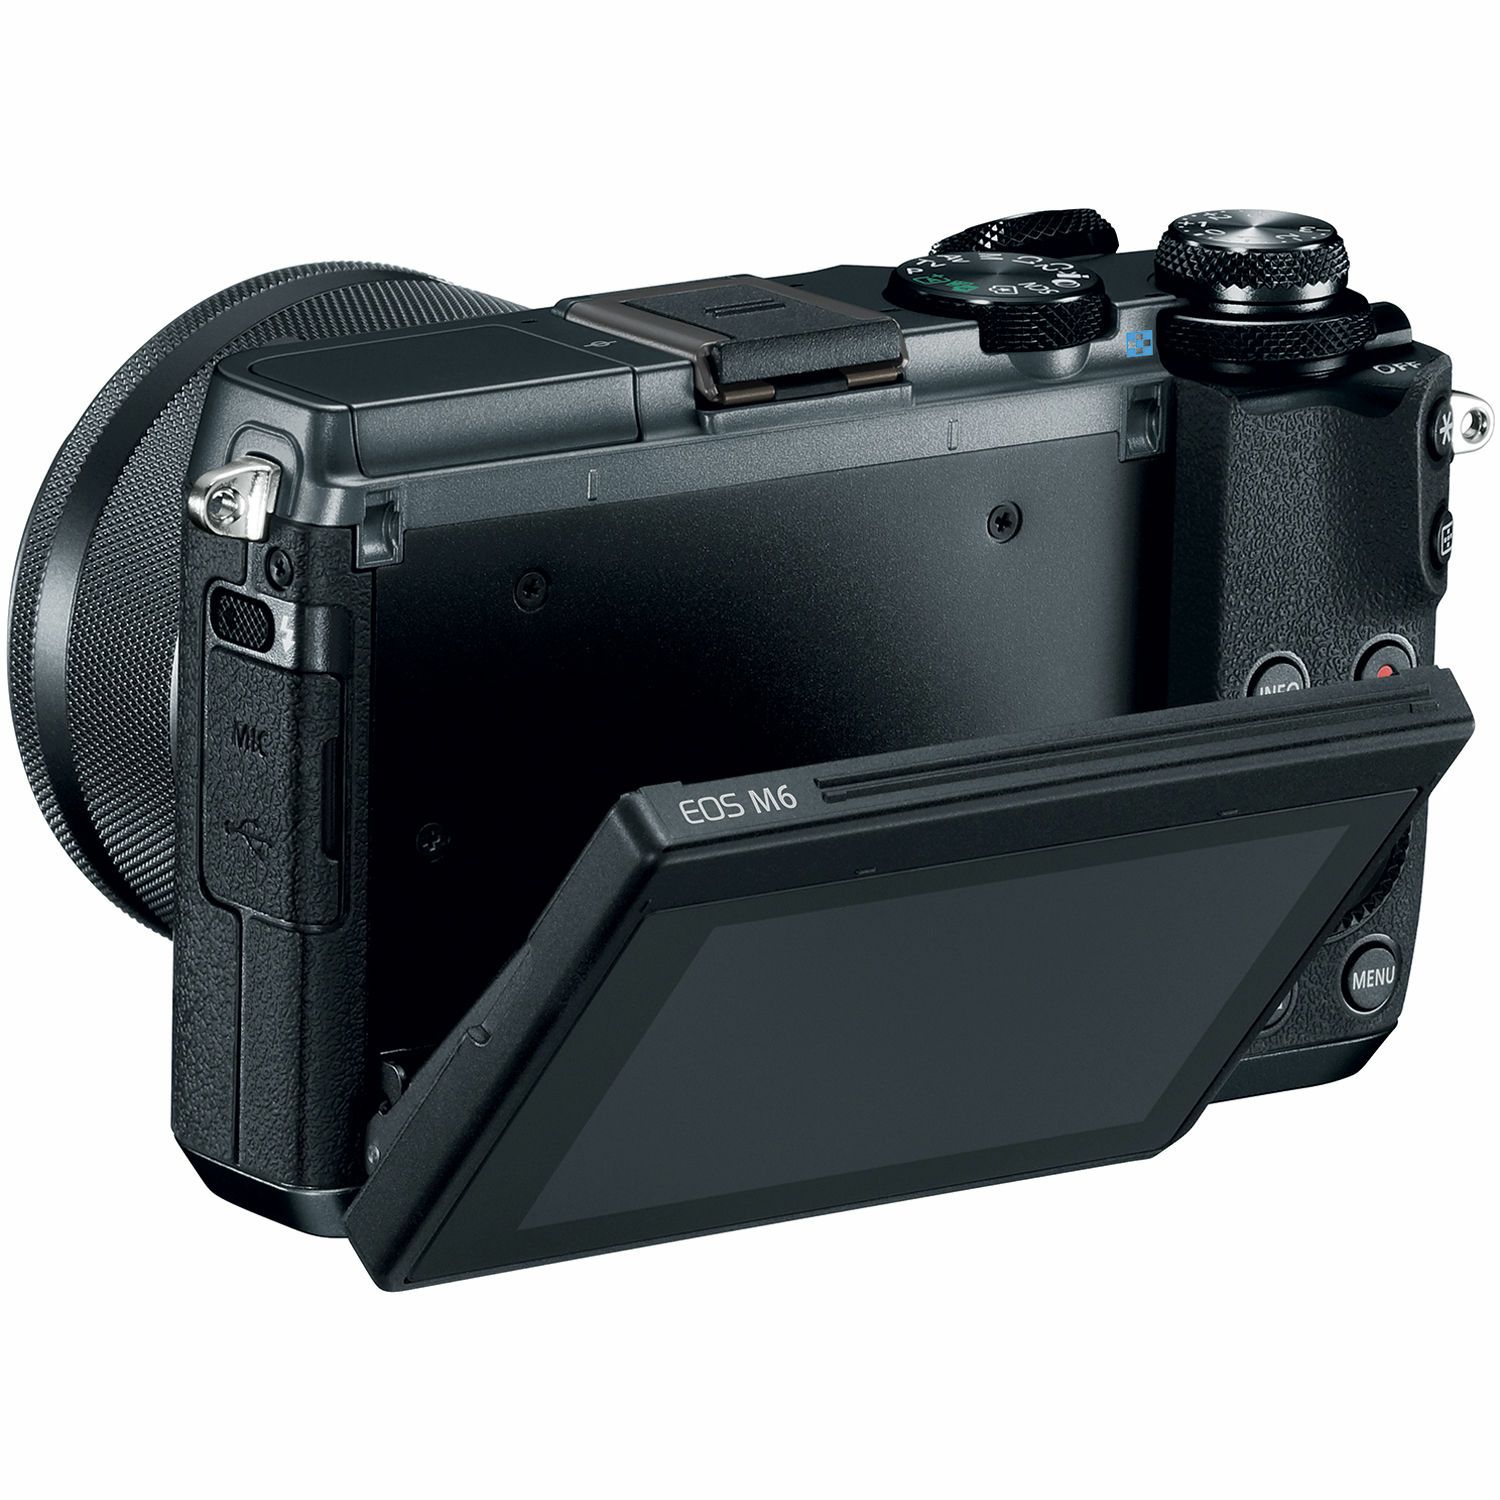 Canon EOS M6 + 15-45 IS STM Black Mirrorless Digital Camera with lens crni Digitalni fotoaparat i objektiv EF-M 15-45mm f/3.5-6.3 (1724C012AA)